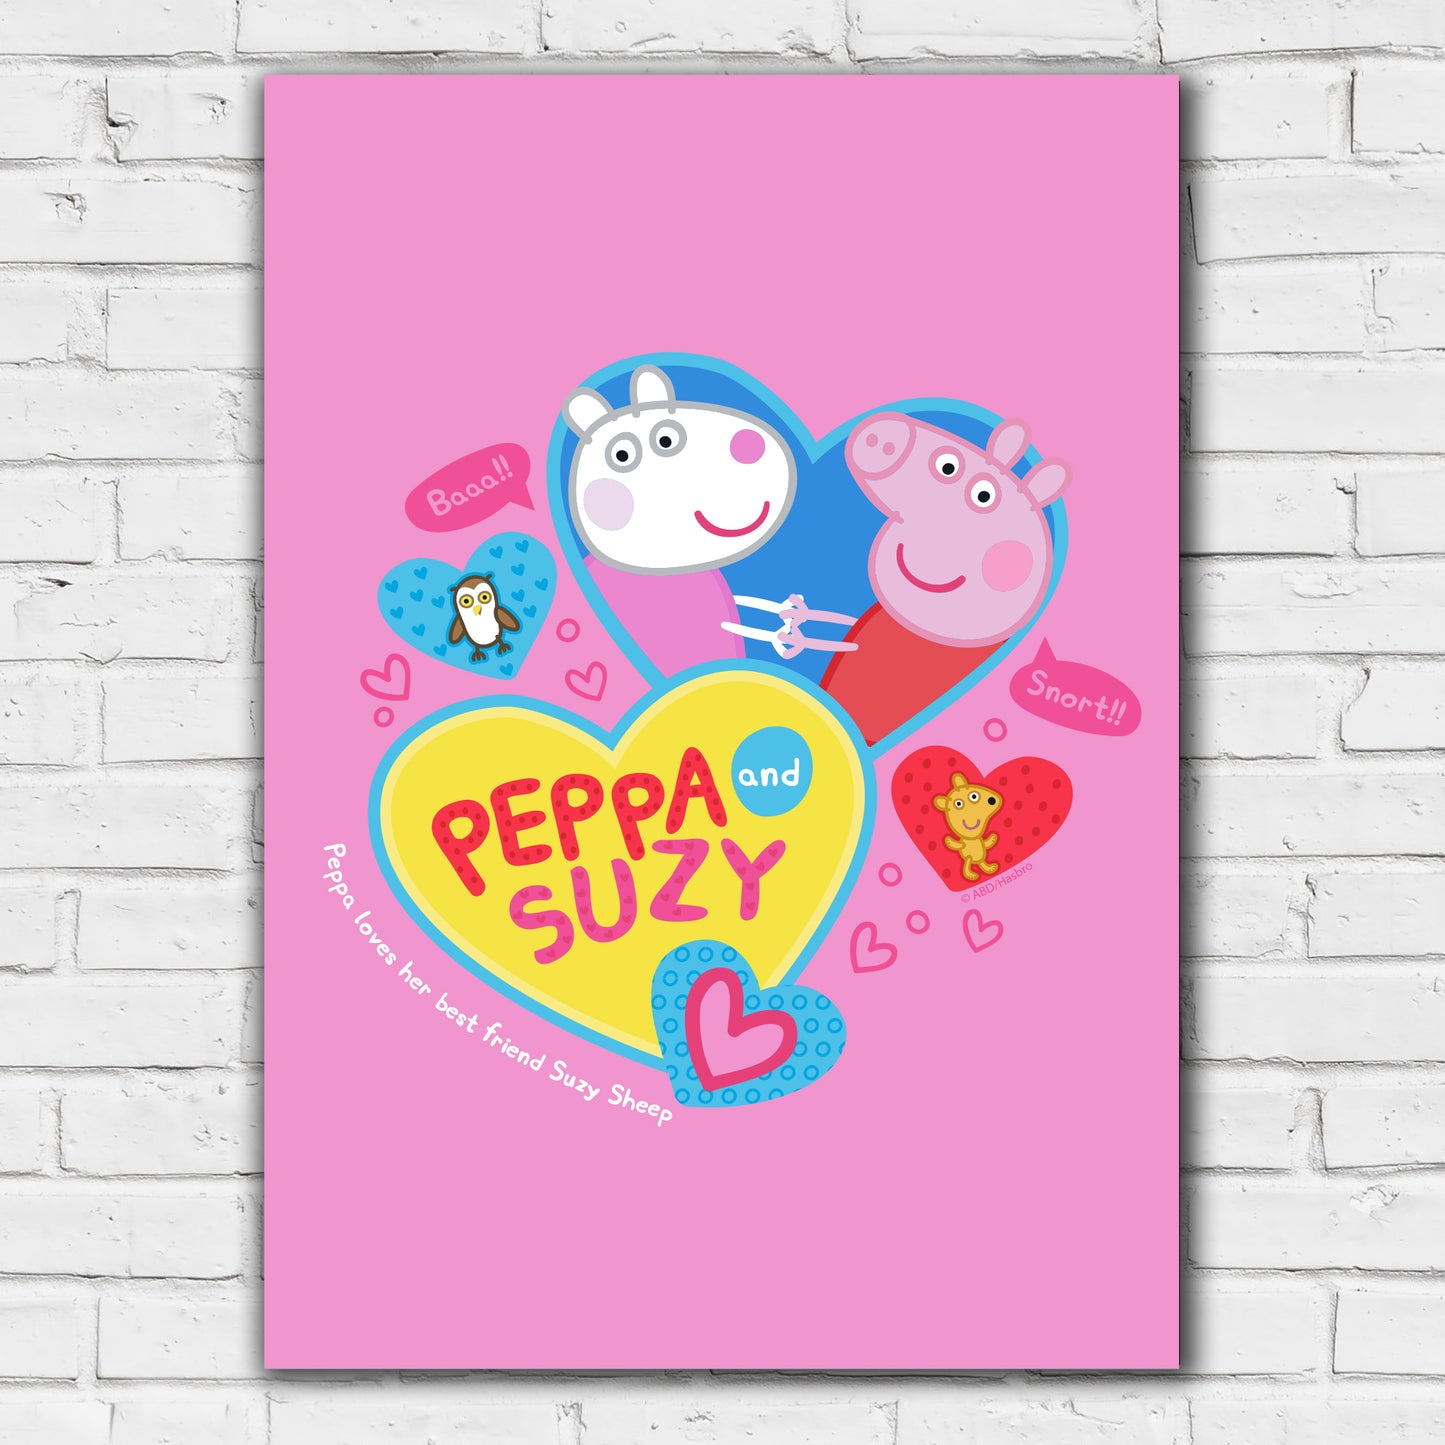 Peppa Pig Print - Peppa and Suzy Pink Heart Poster Wall Art